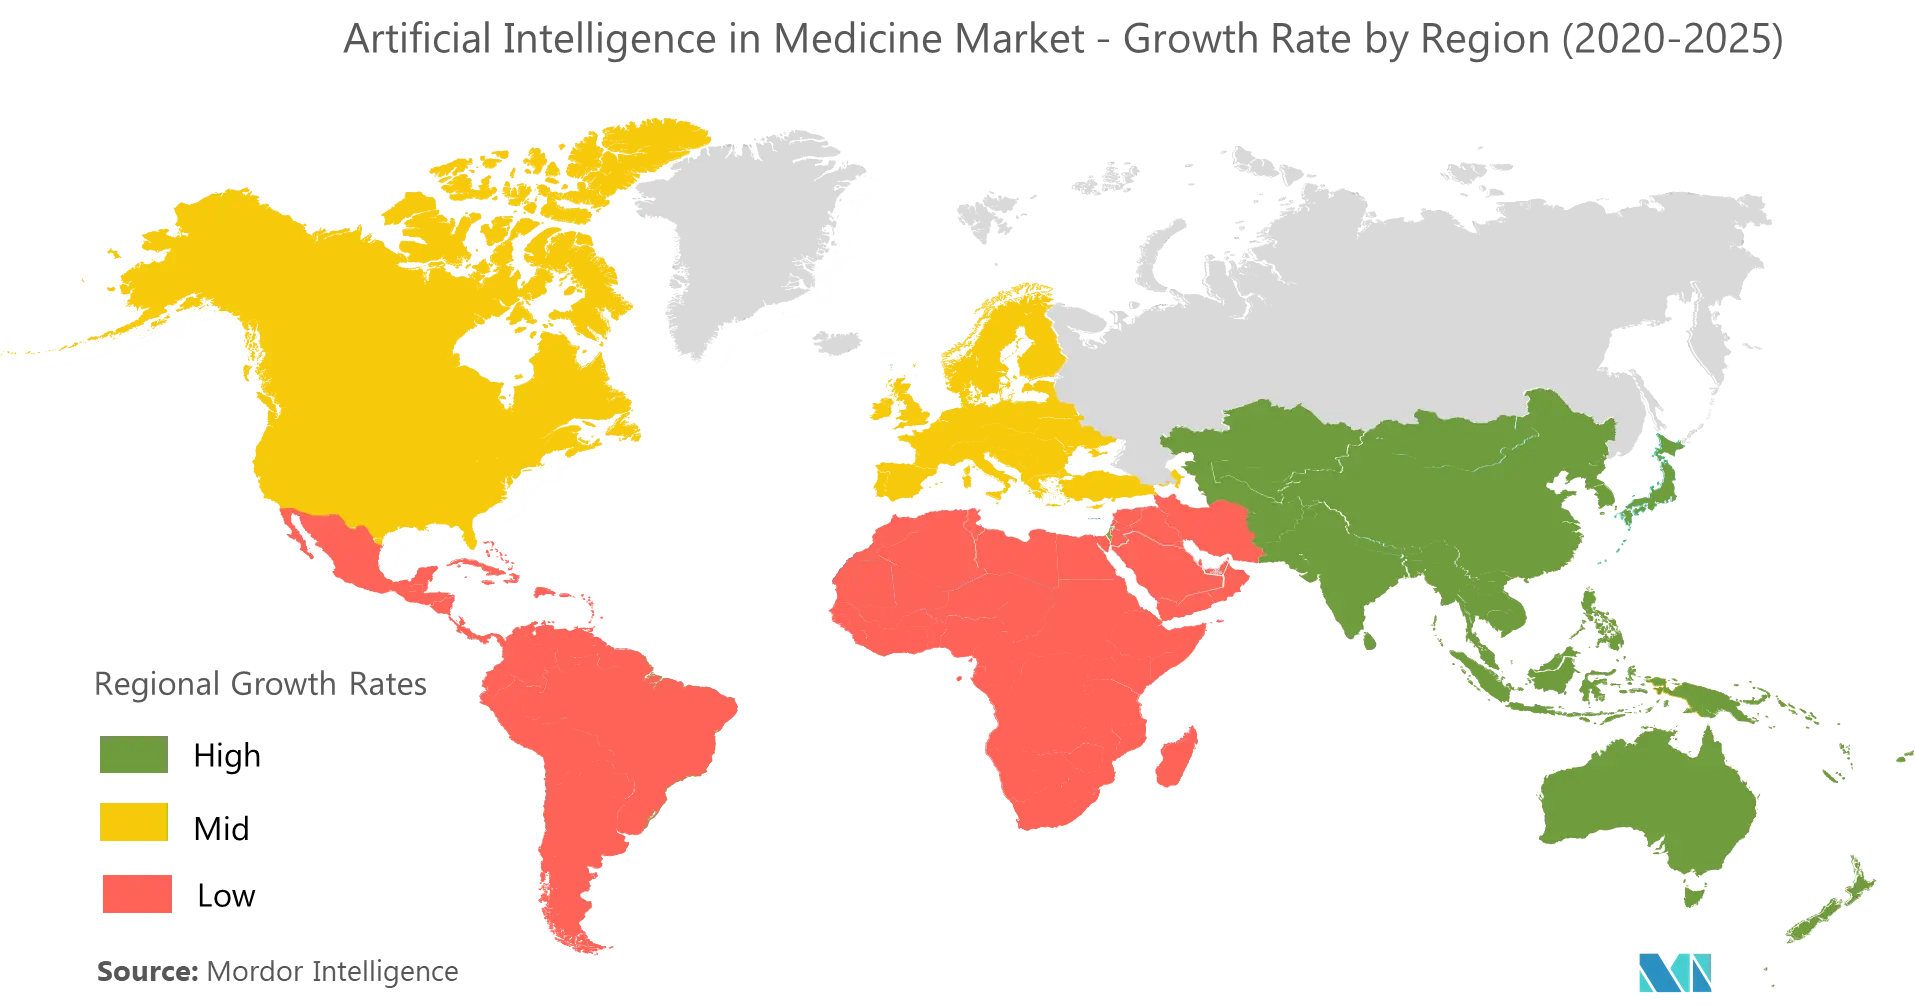 Artificial Intelligence In Medicine Market Growth